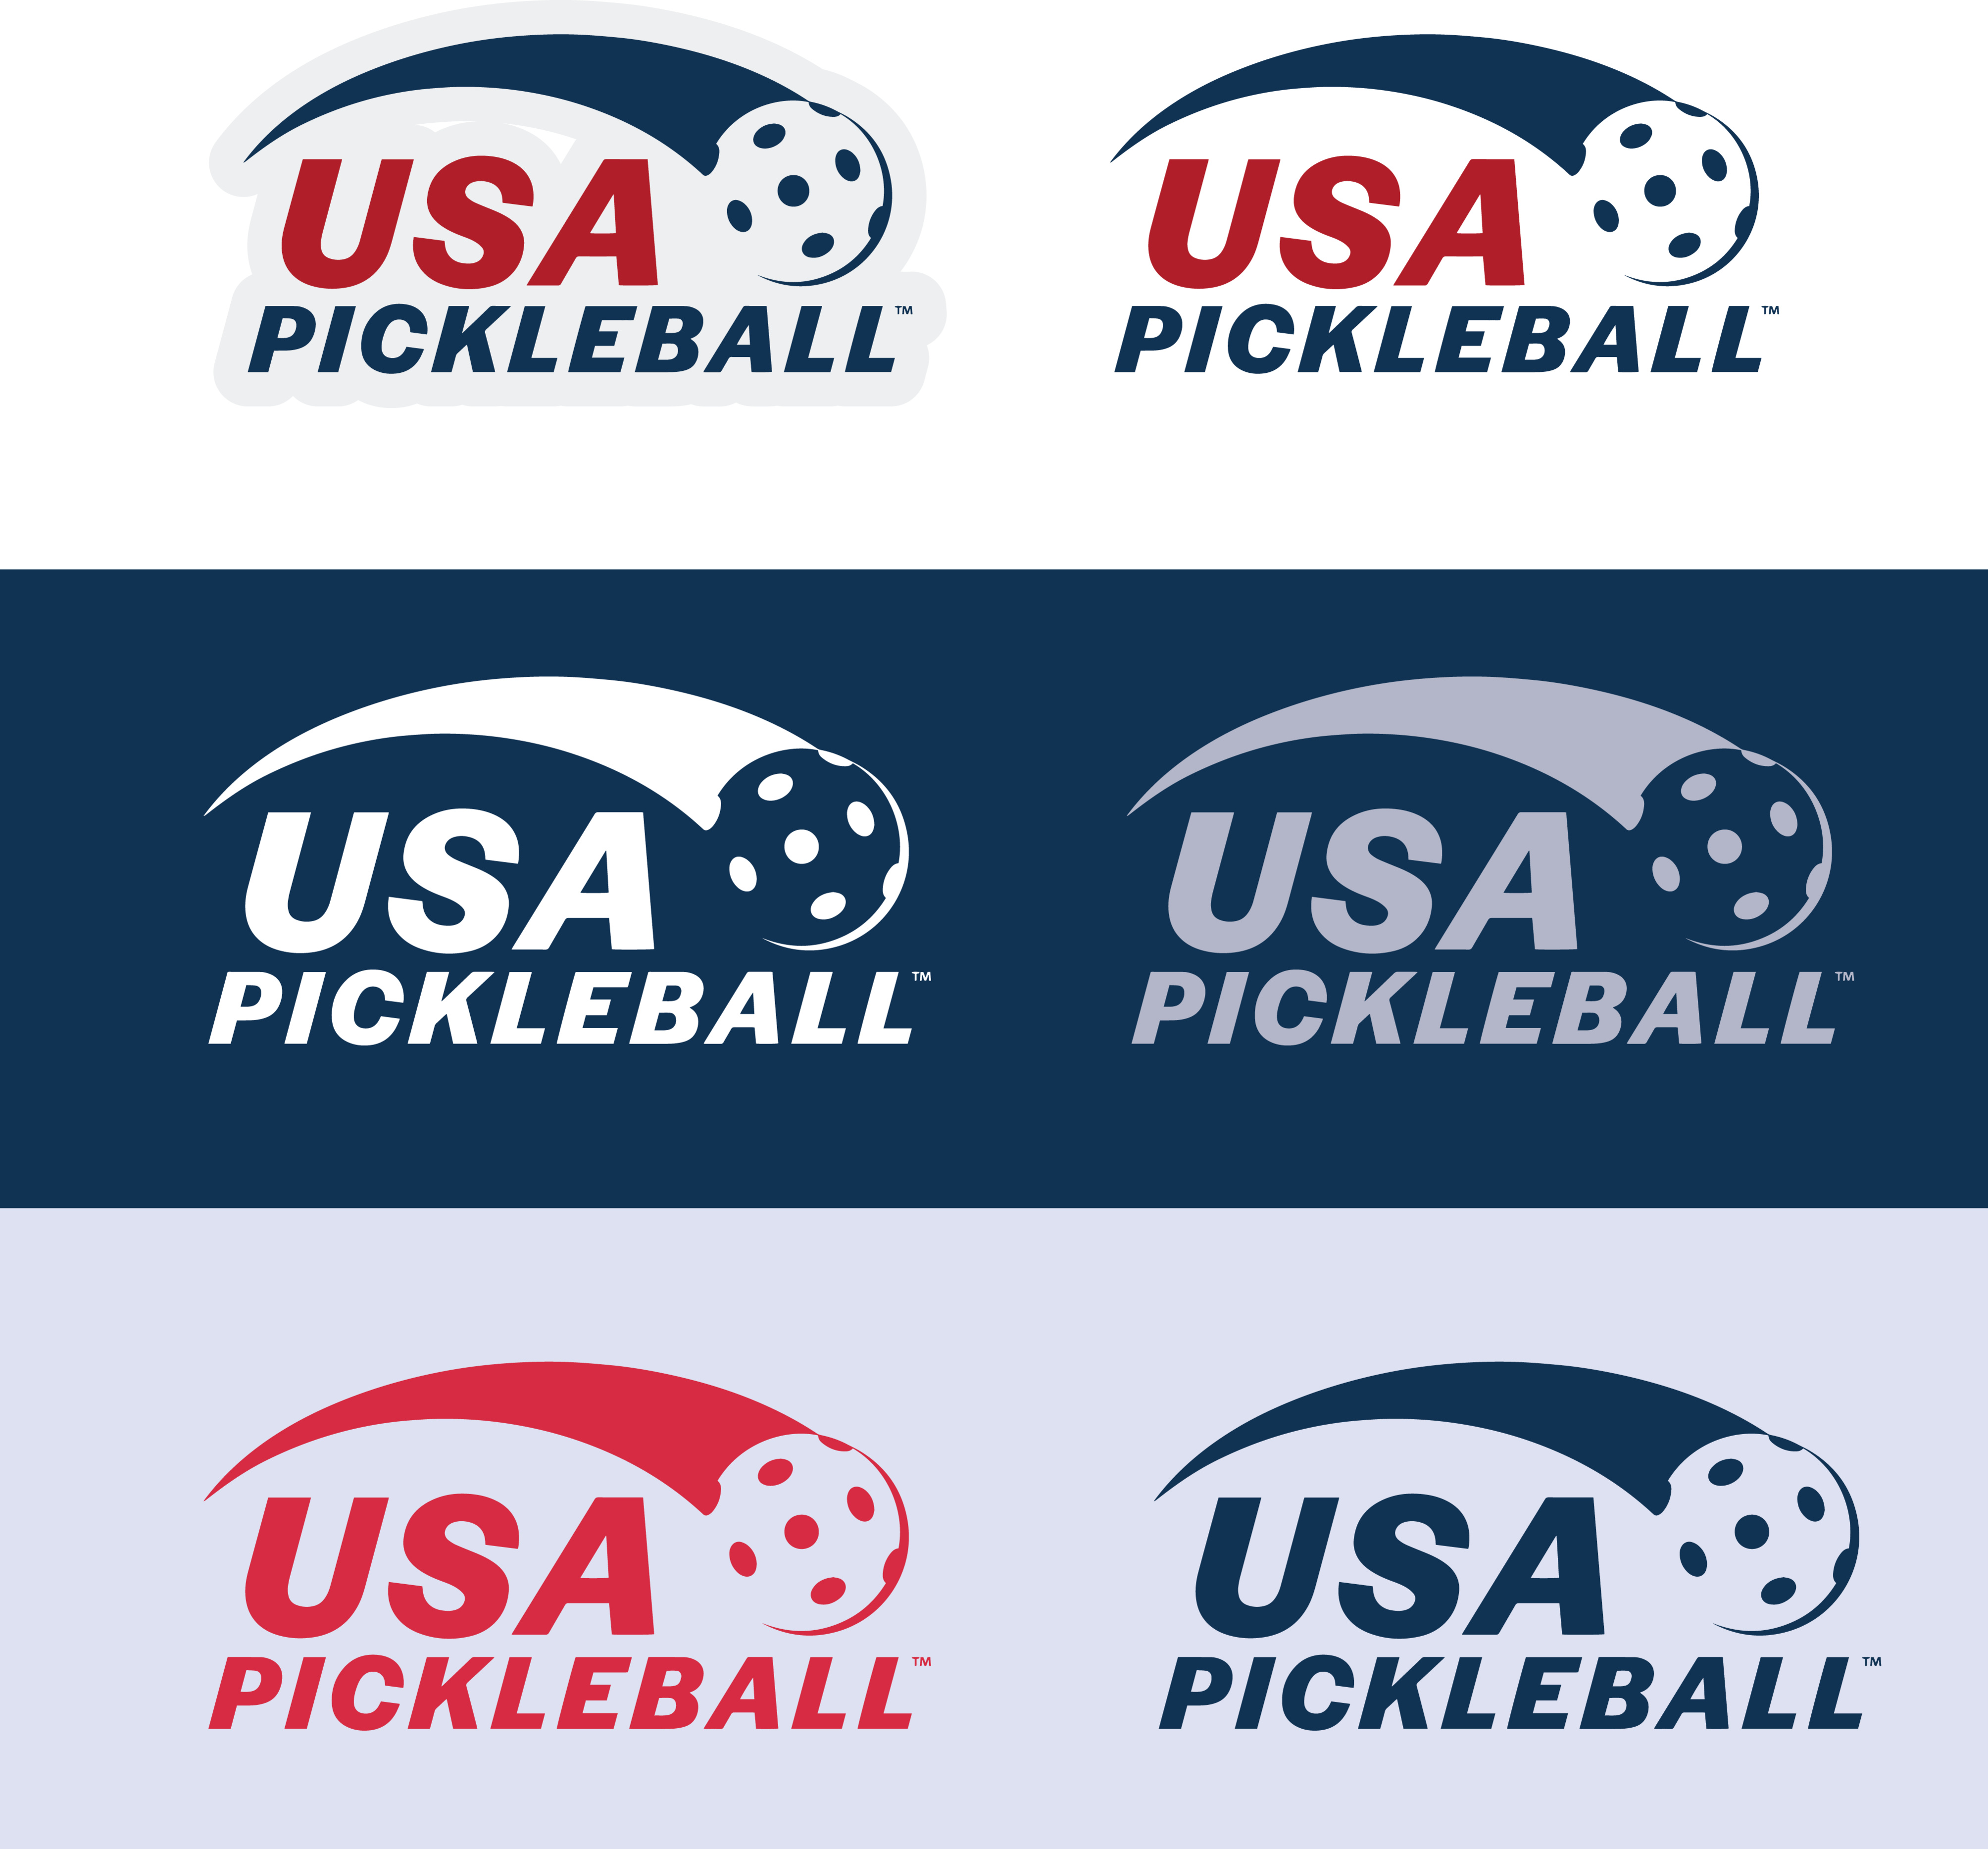 USA Pickleball Logos